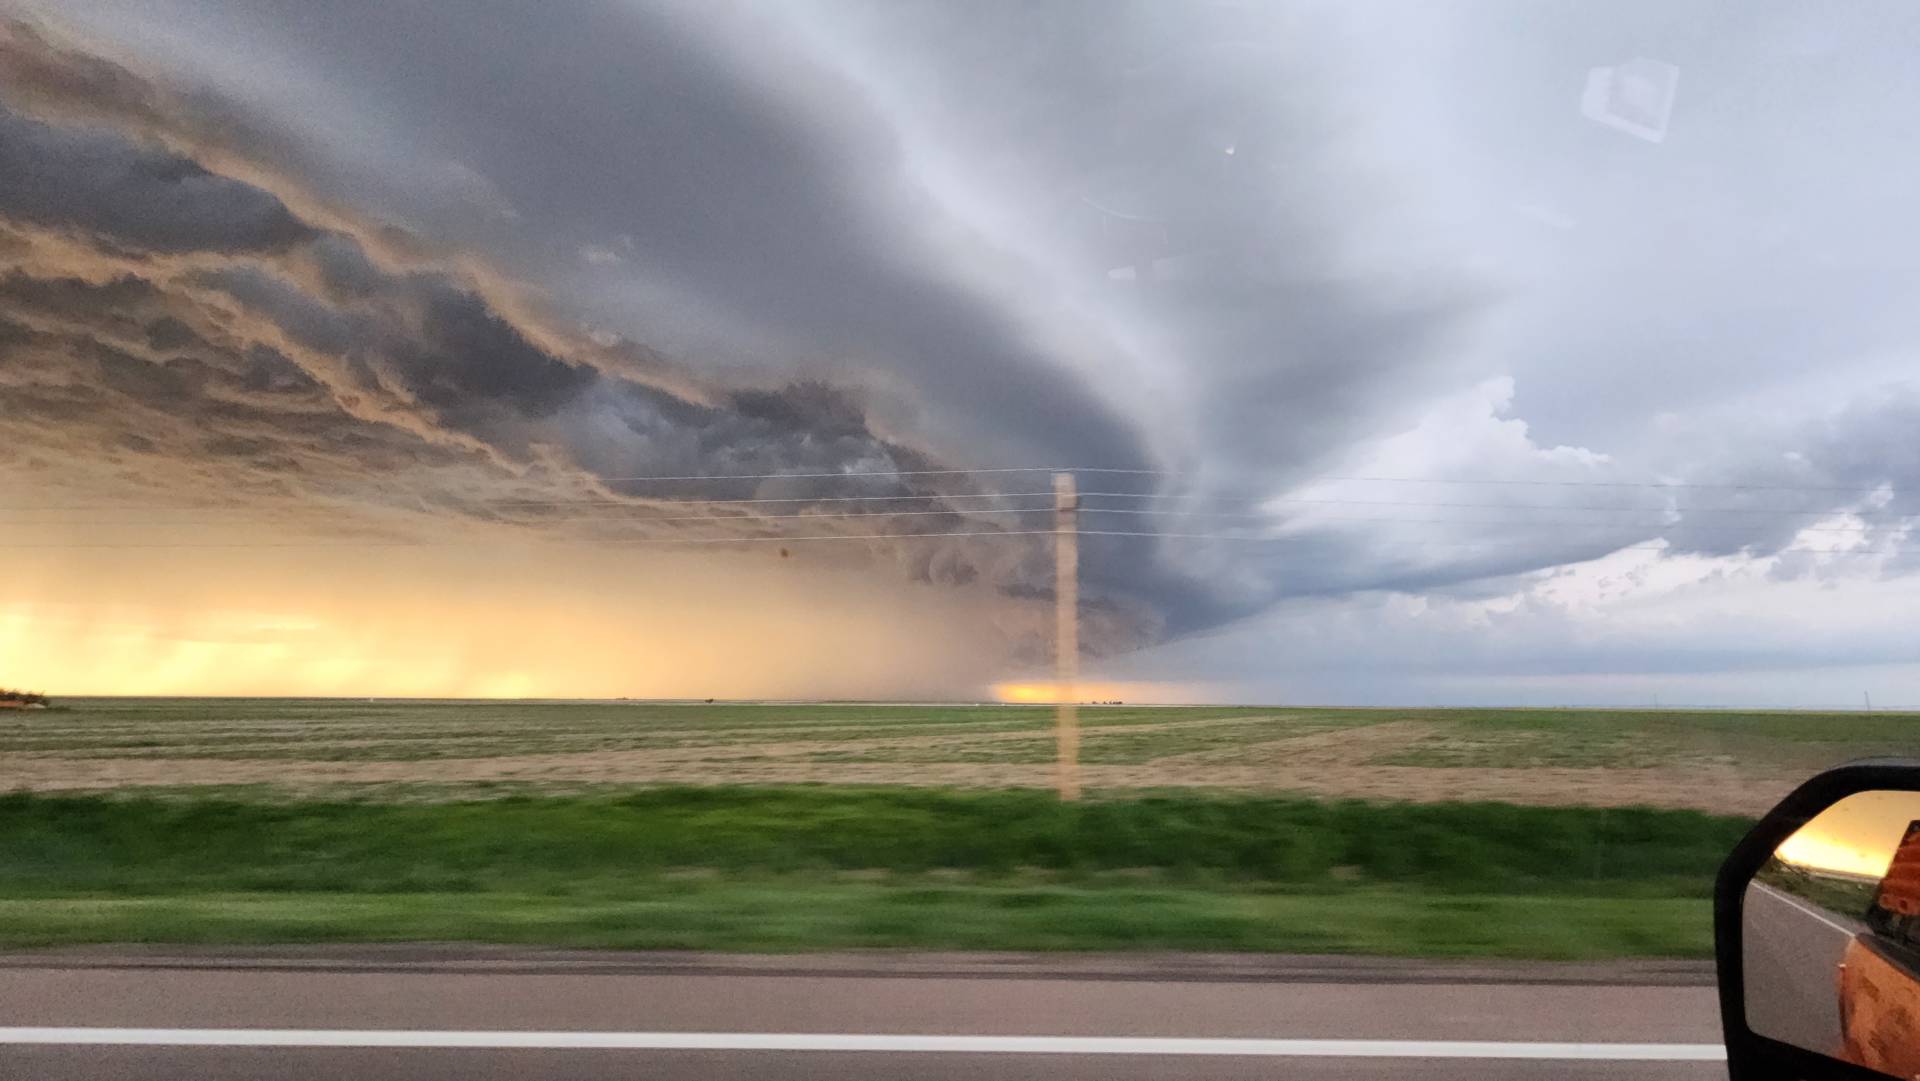 Jaw dropping sunset shelf cloud on this storm coming into Richfield, Kansas 08:24 PM #kswx @NWSGoodland @NWSDodgeCity